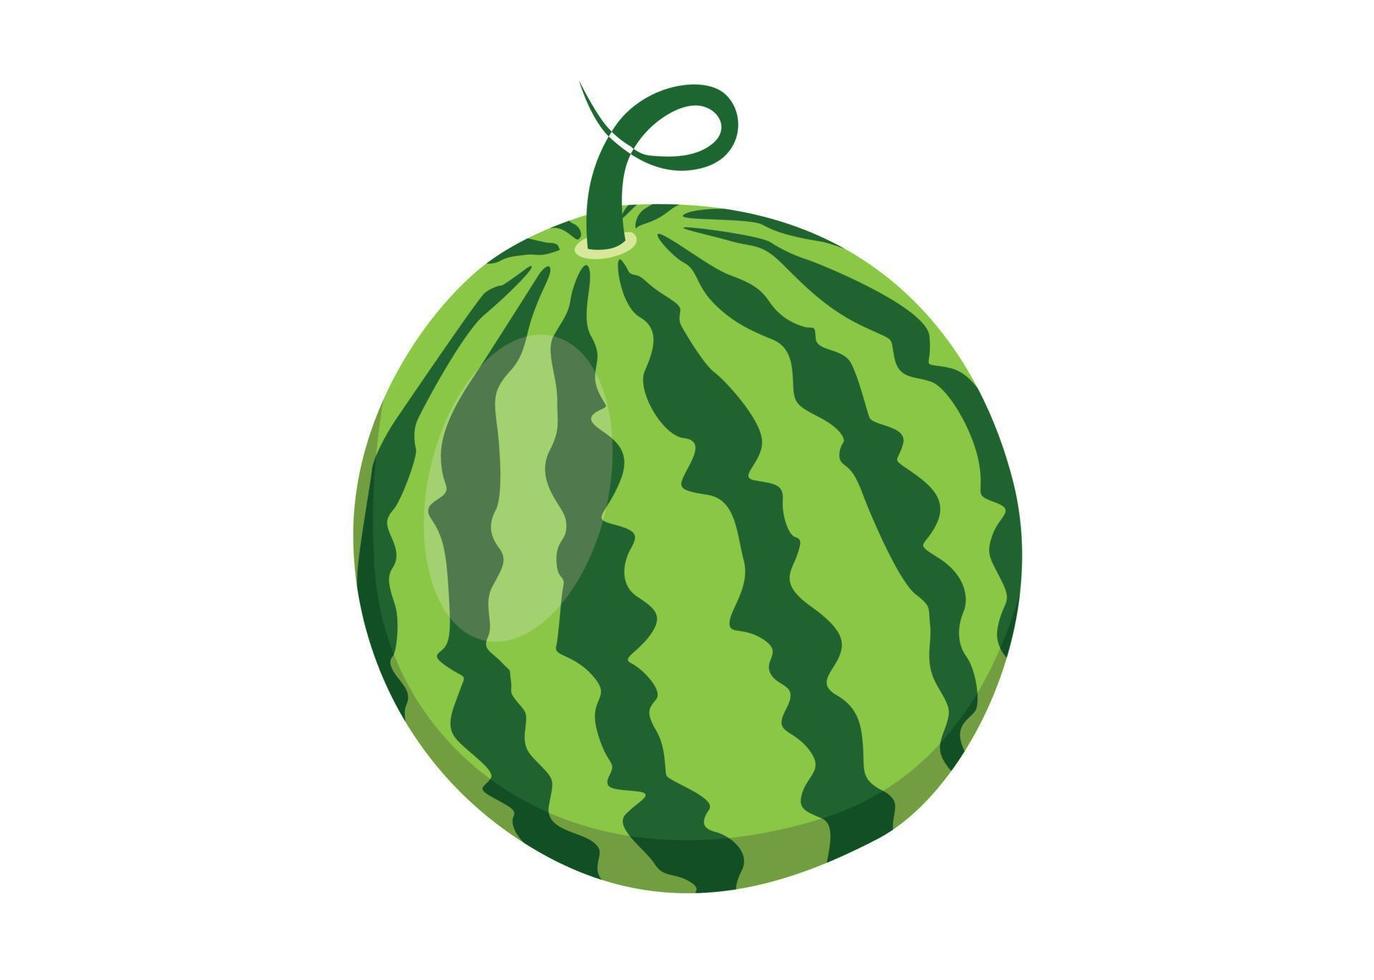 watermelon shape illustration design vector